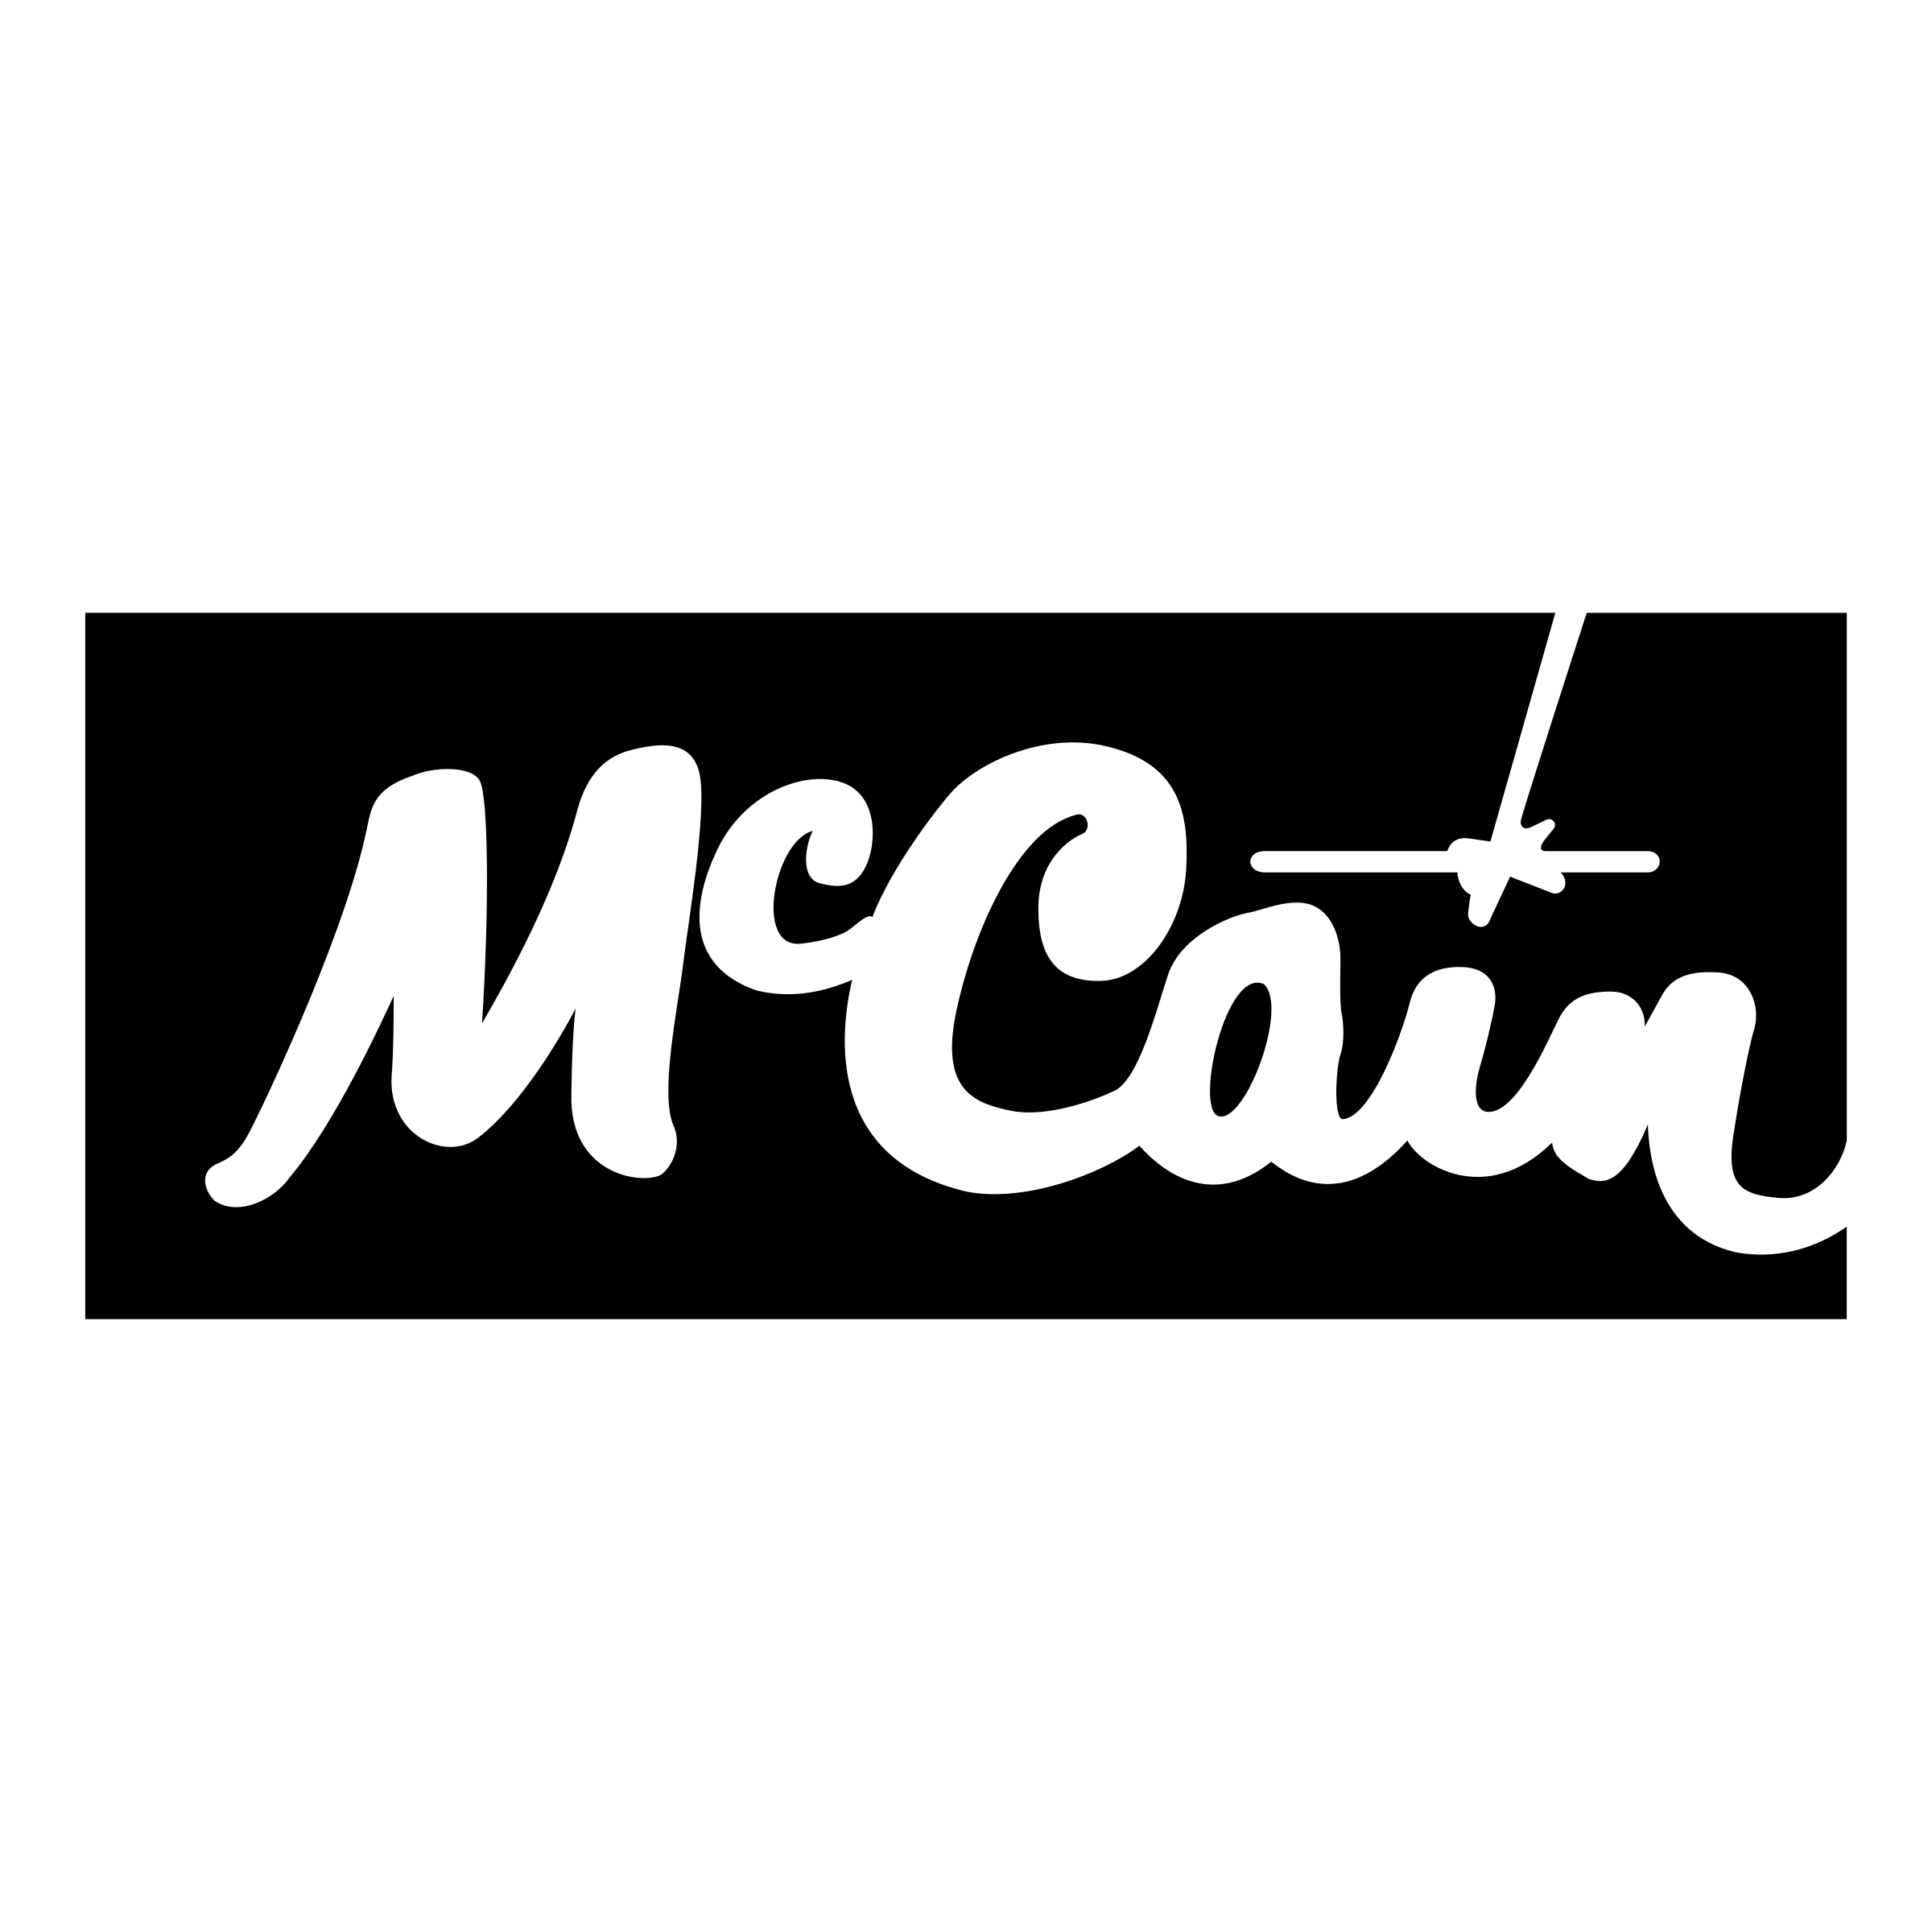 McCain Logo - McCain Logo PNG Transparent & SVG Vector - Freebie Supply